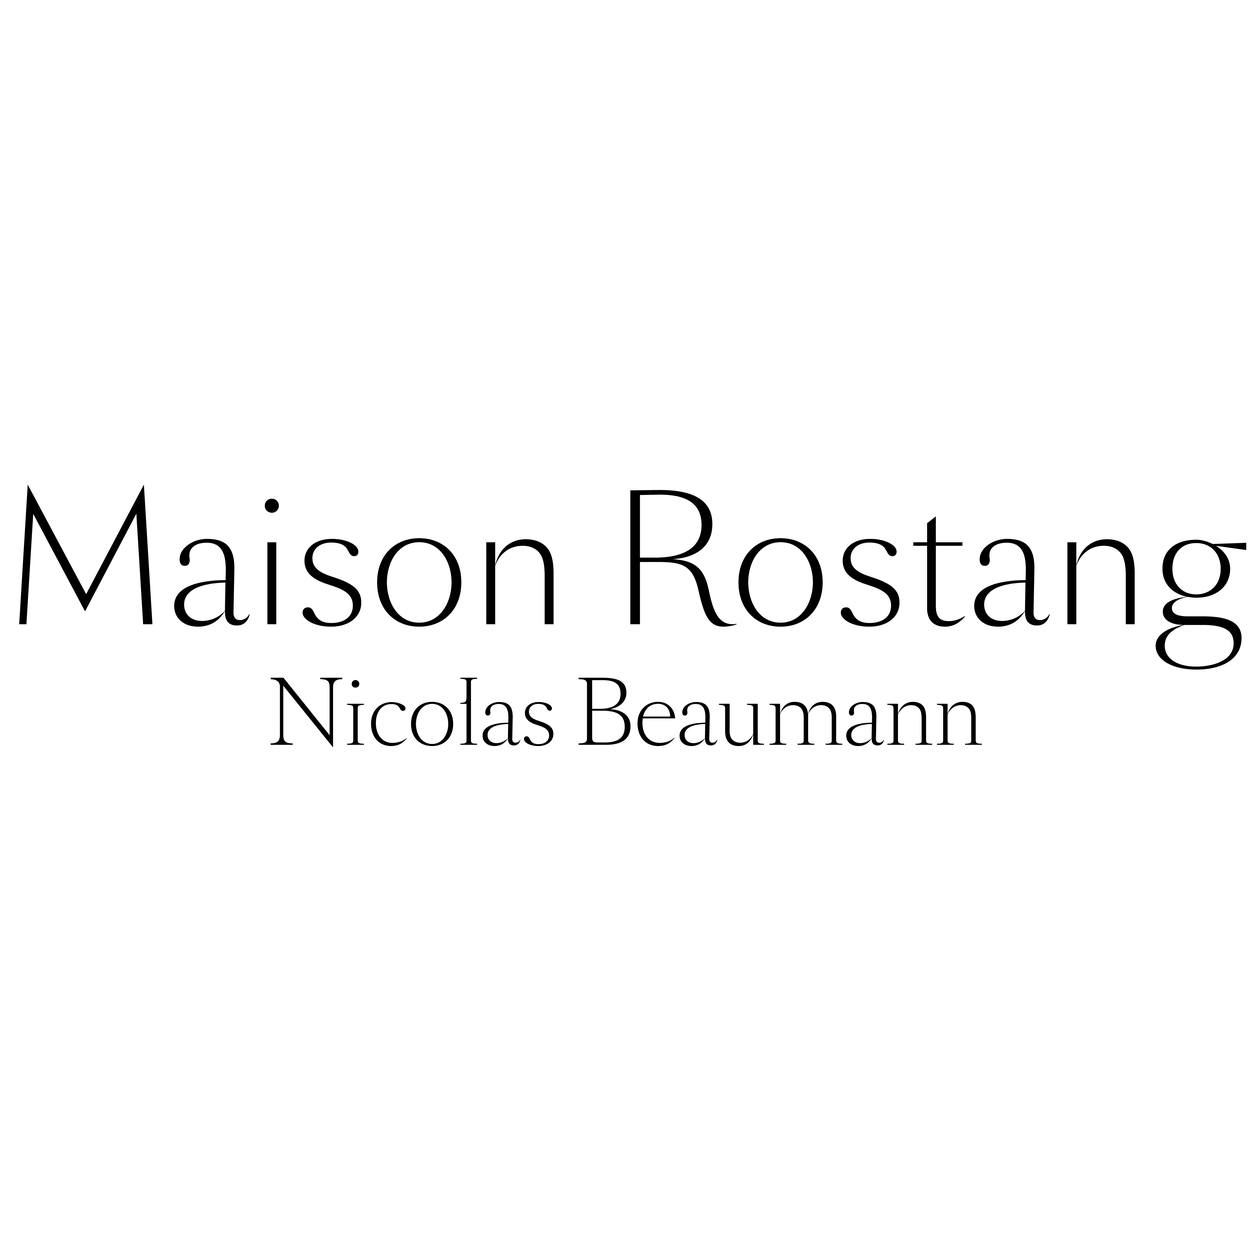 Image result for Maison Rostang